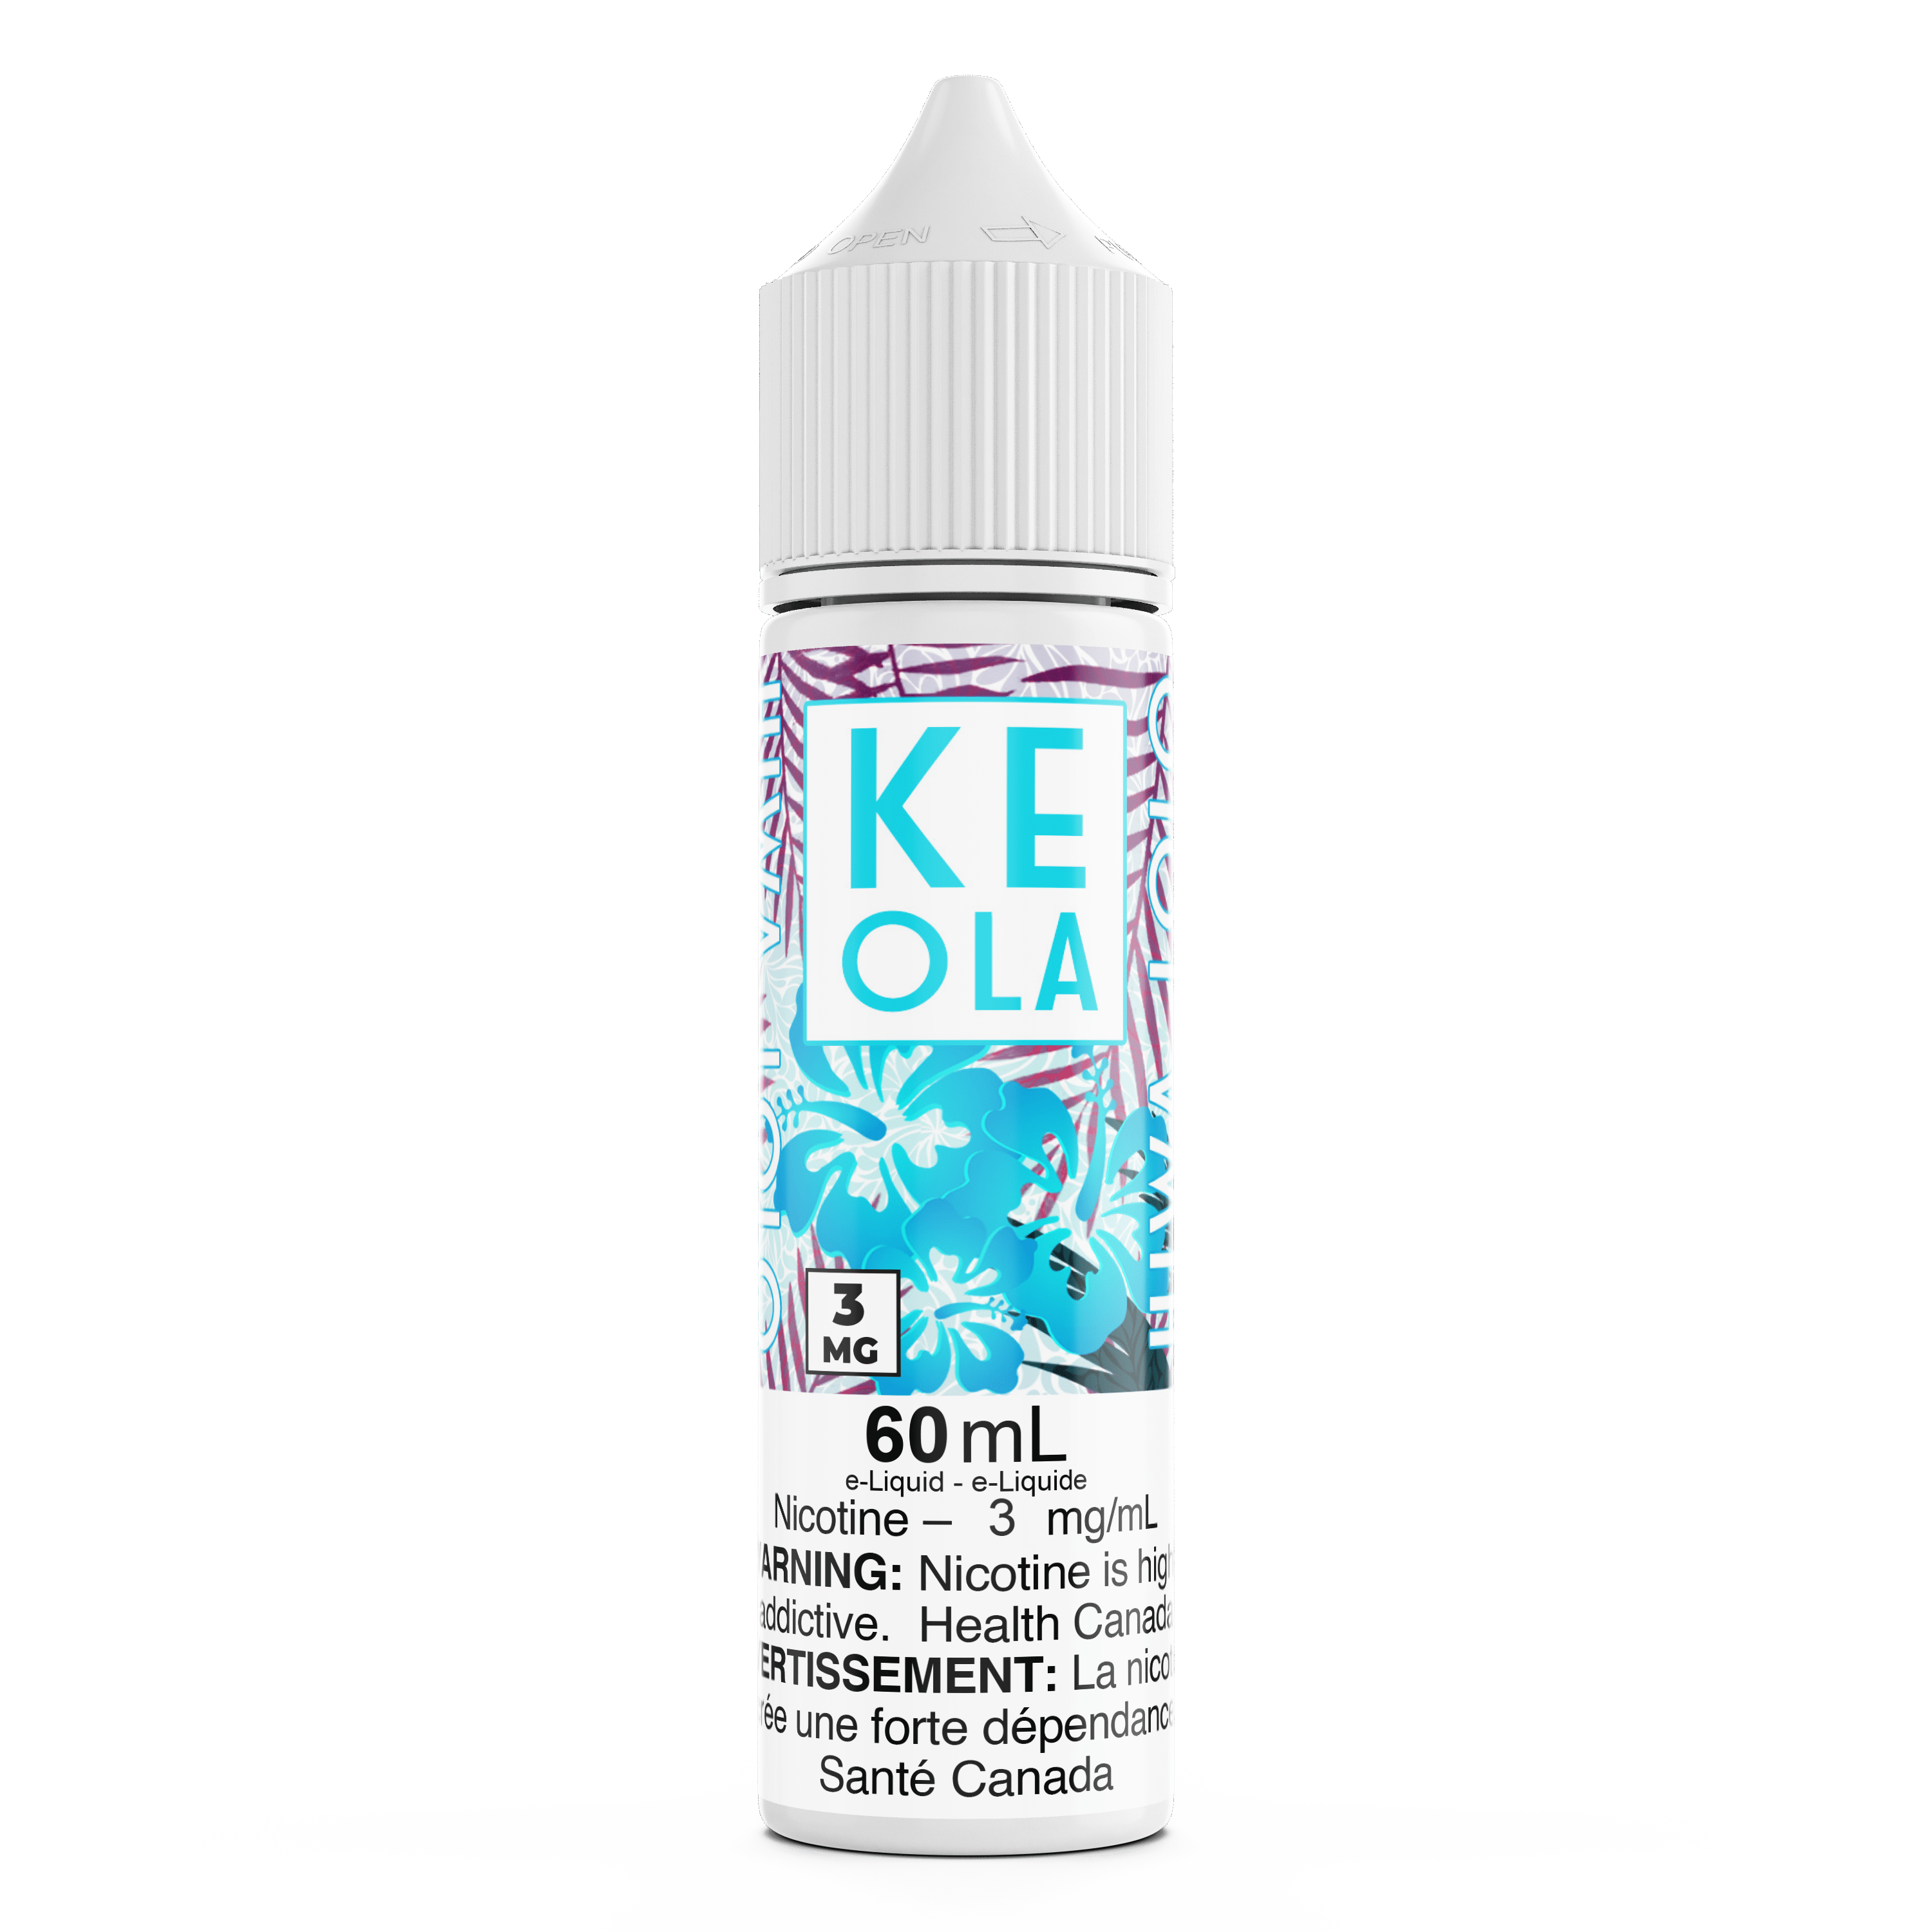 KEOLA - HIWA LOLO available on Canada online vape shop